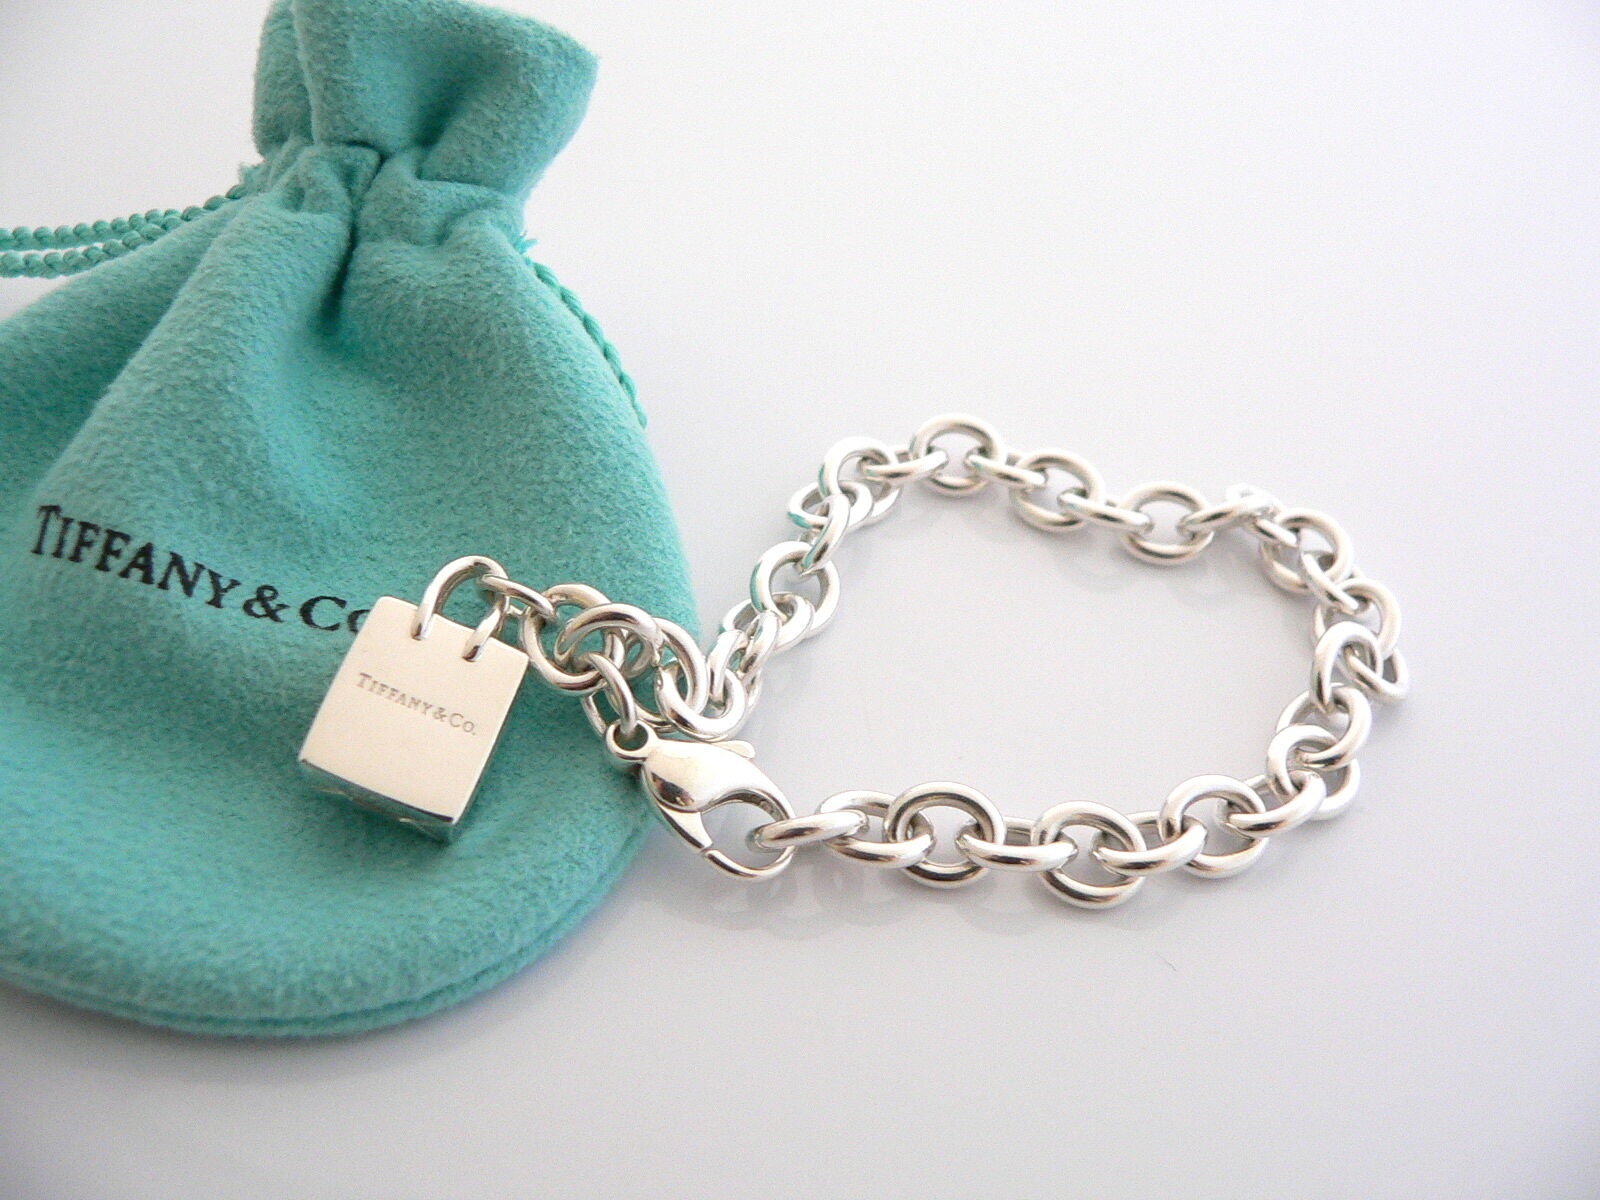 Silver bag charm bracelet